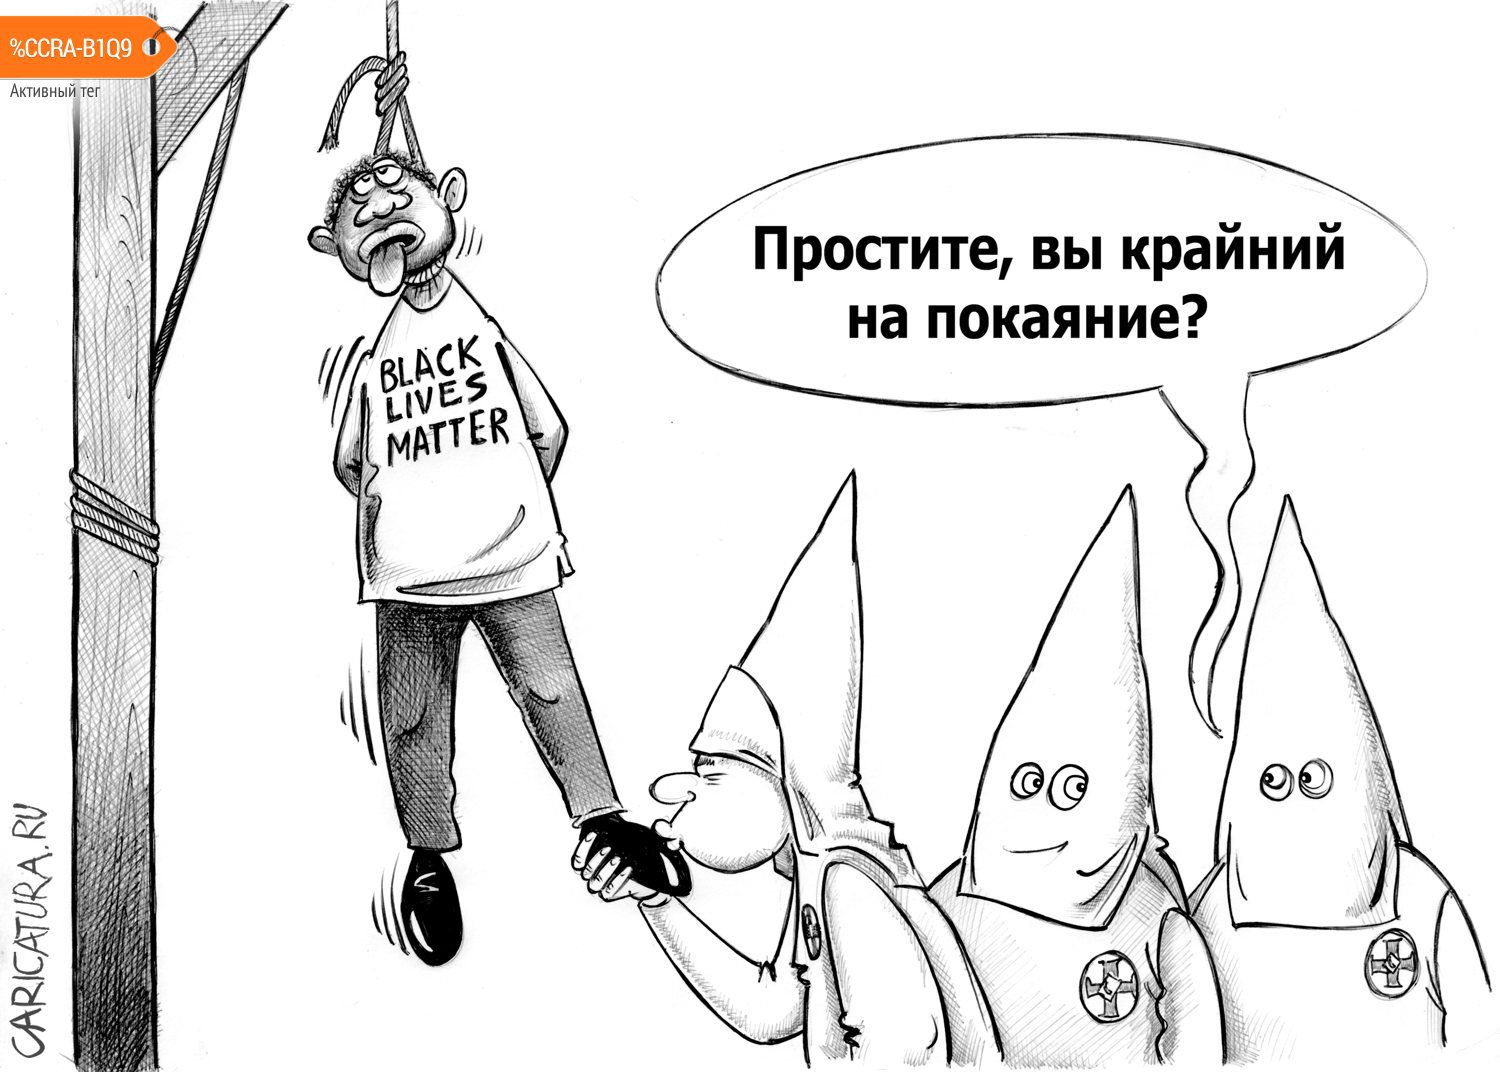 Карикатура "Крайний на покаяние", Сергей Корсун